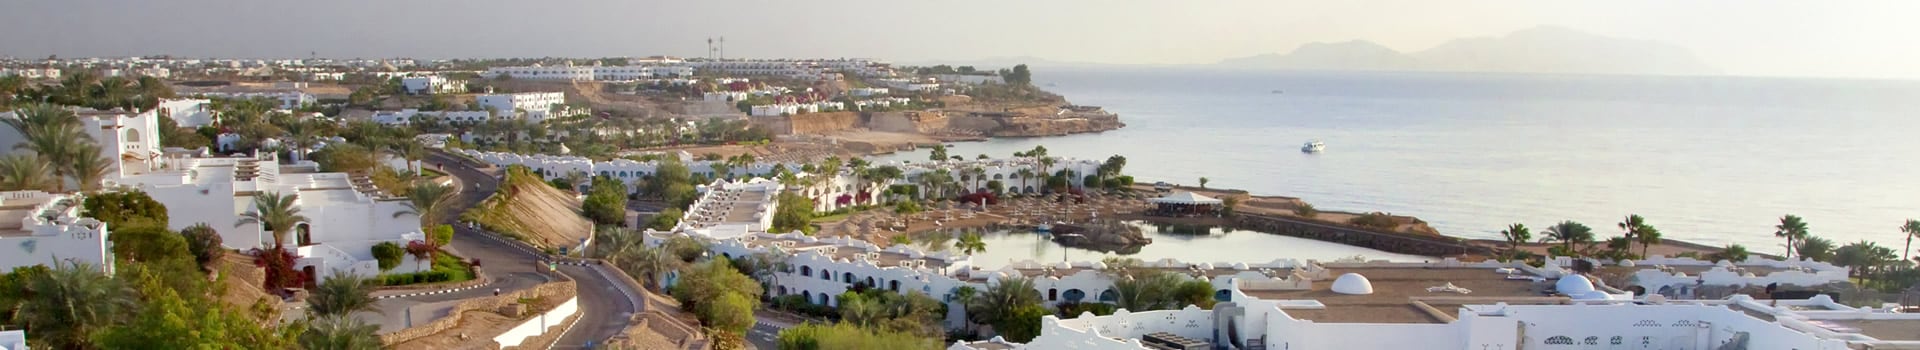 Valencia - Sharm el sheikh